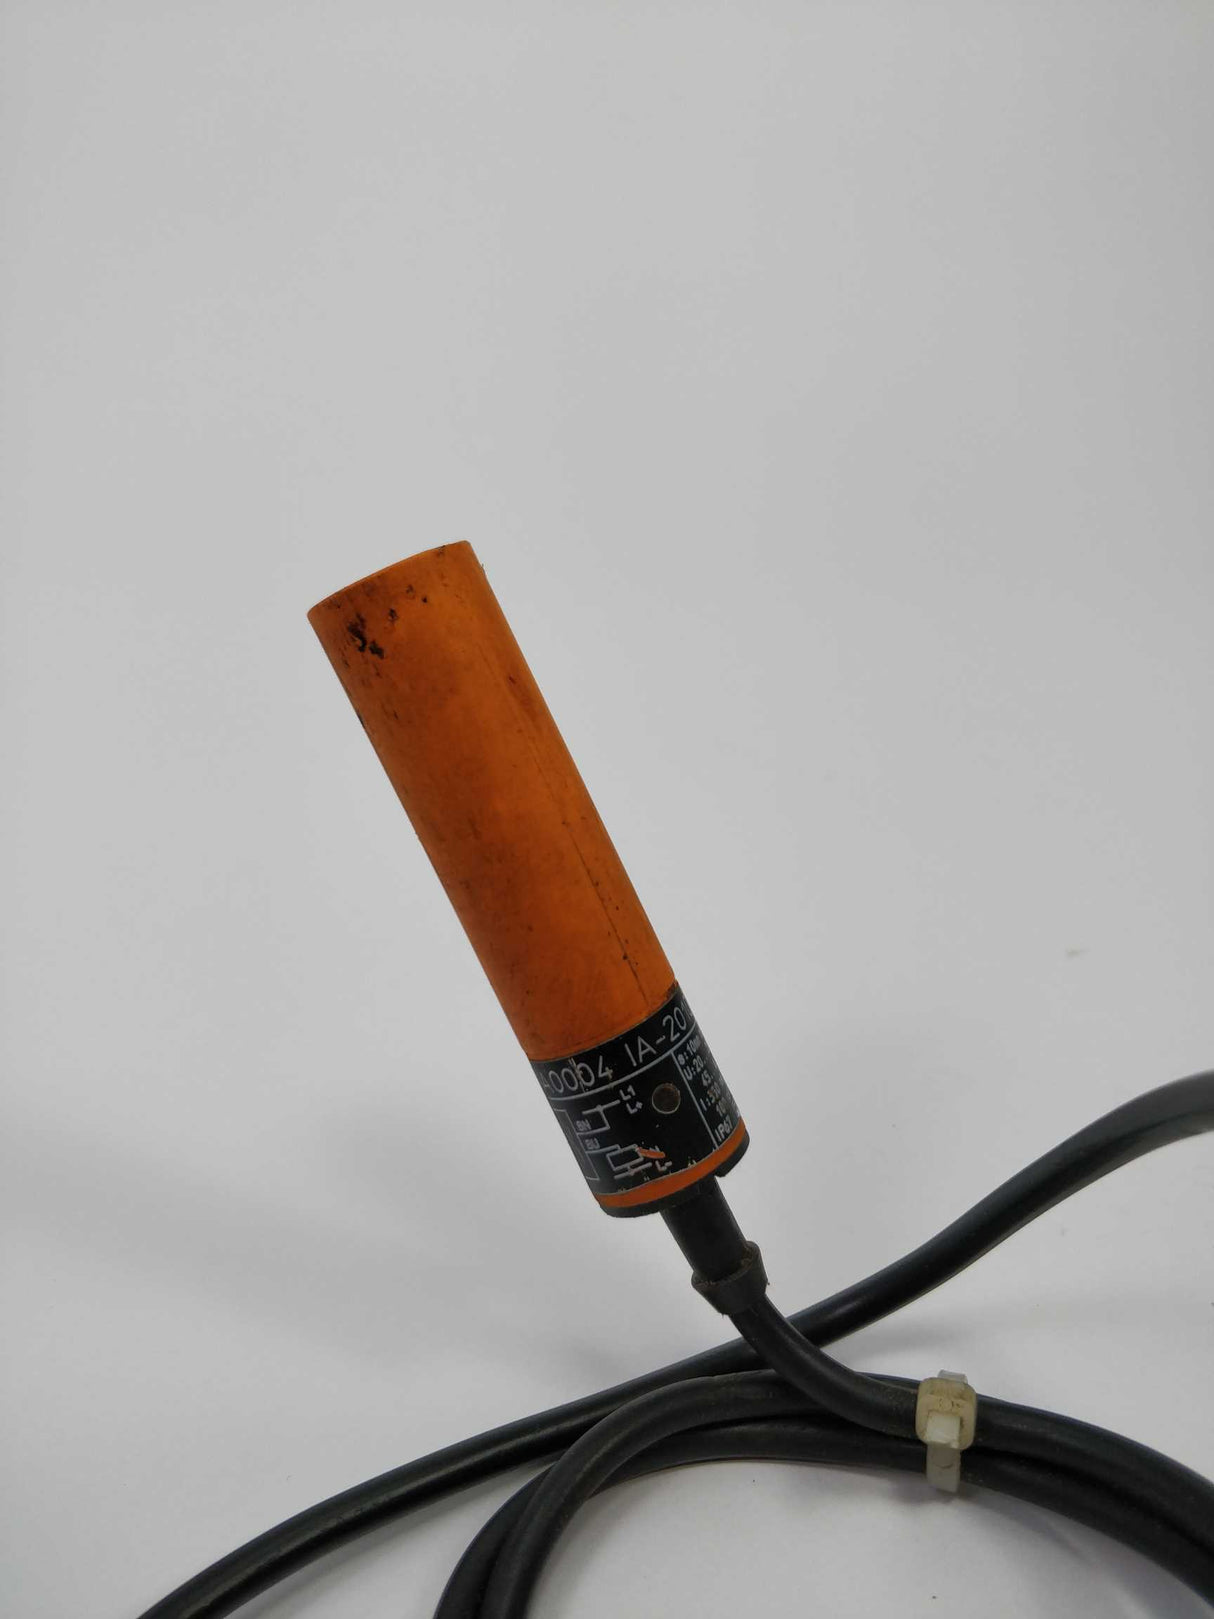 ifm IA0004 IA-2010-ABOA Inductive sensor